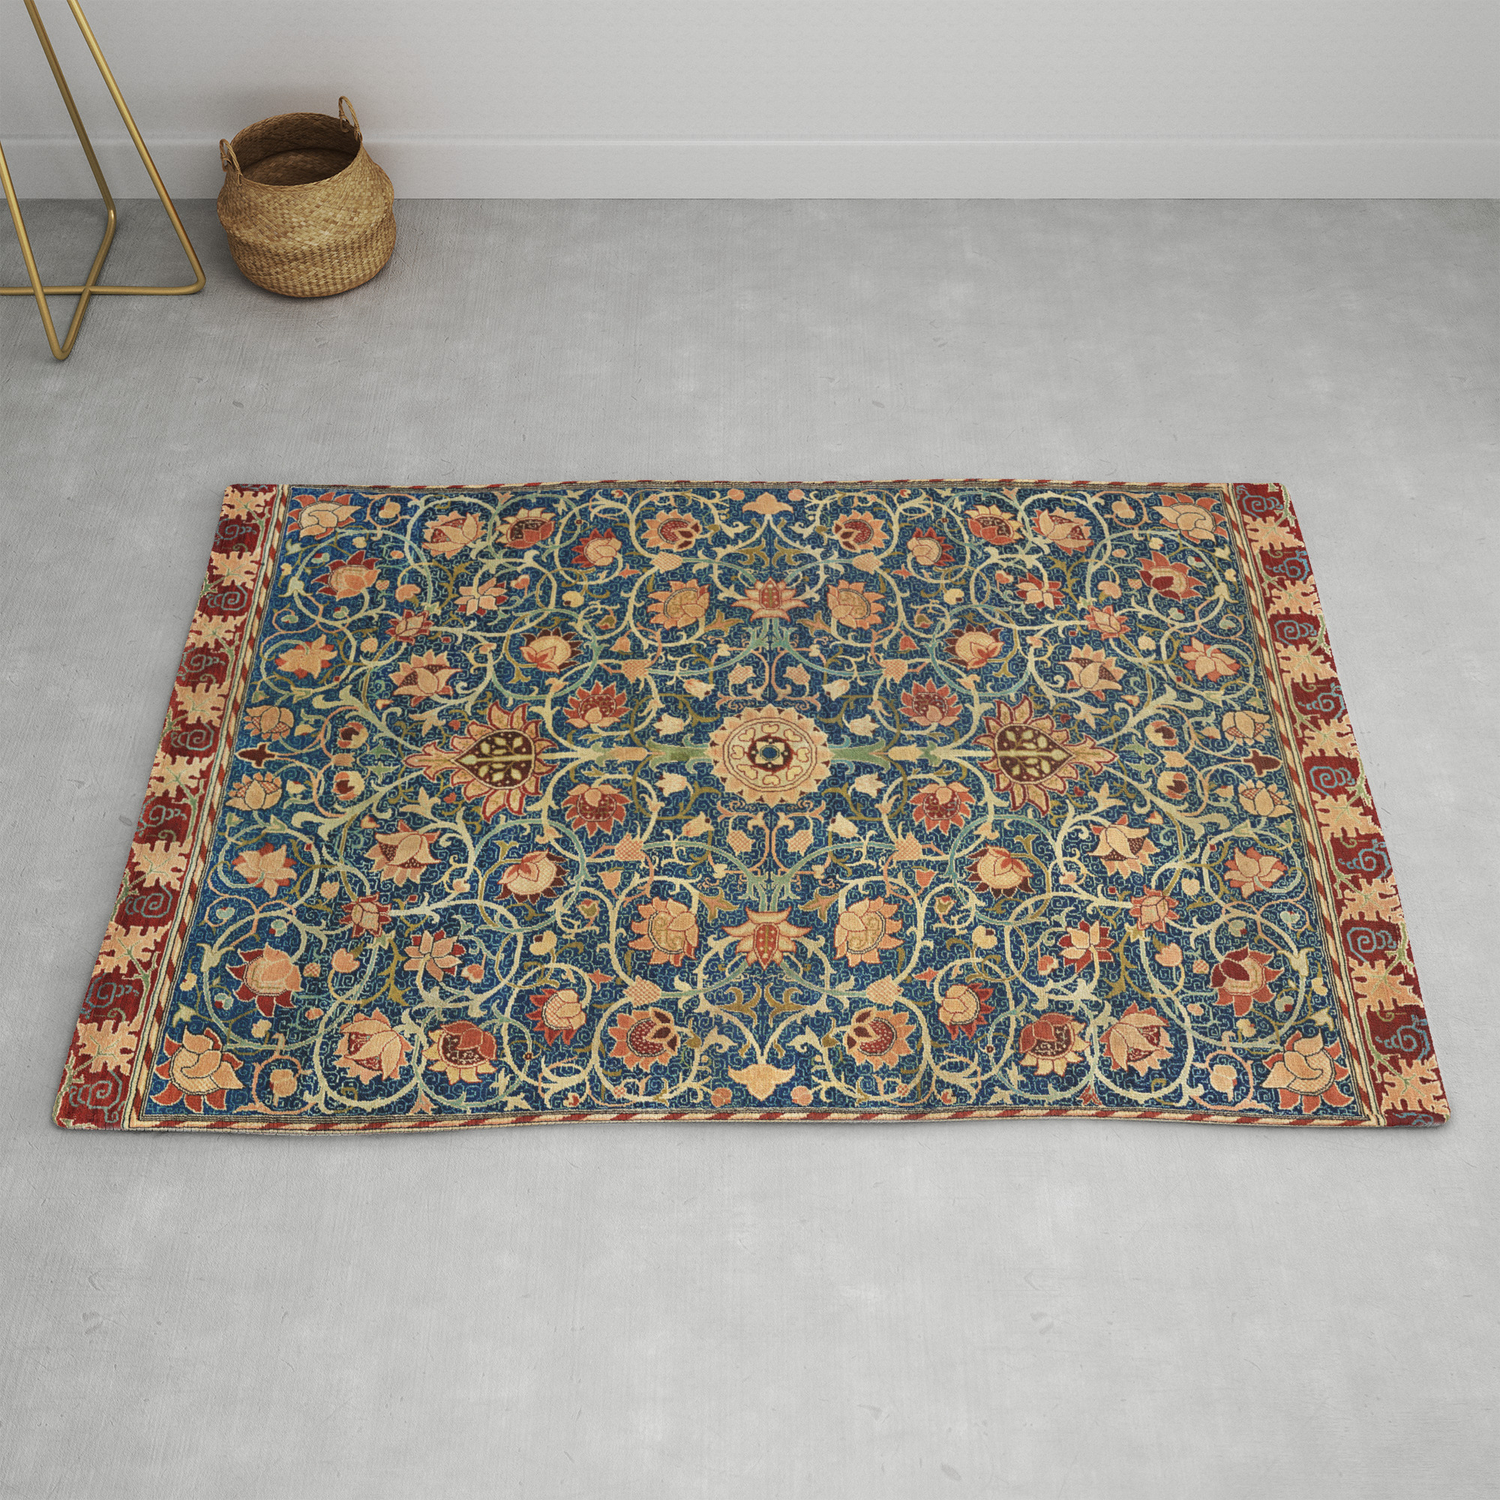 Holland Park Carpet by William Morris